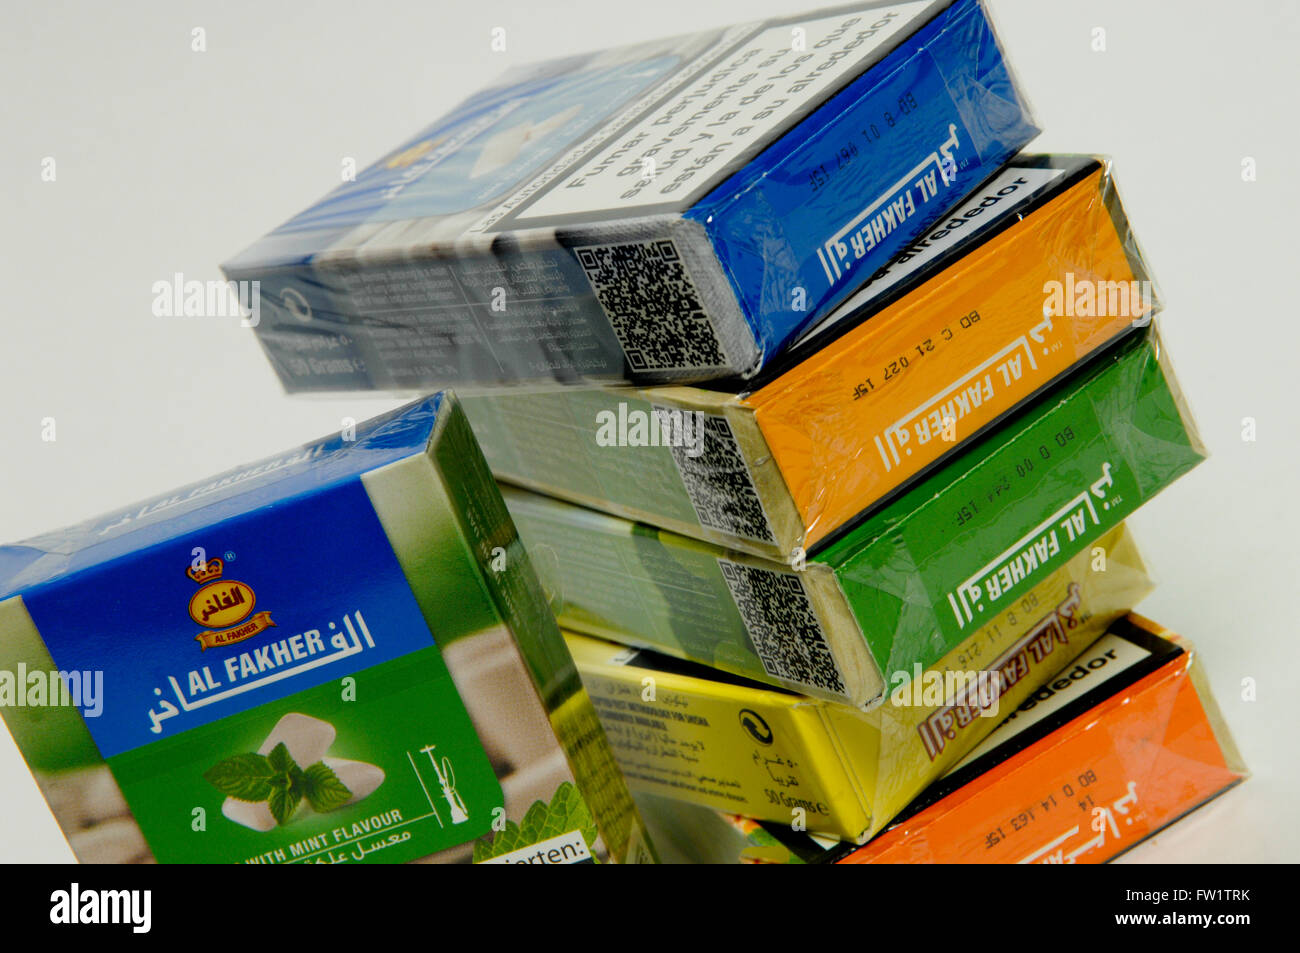 Al Fakher Tobacco is the cream themed line of shisha. Stock Photo